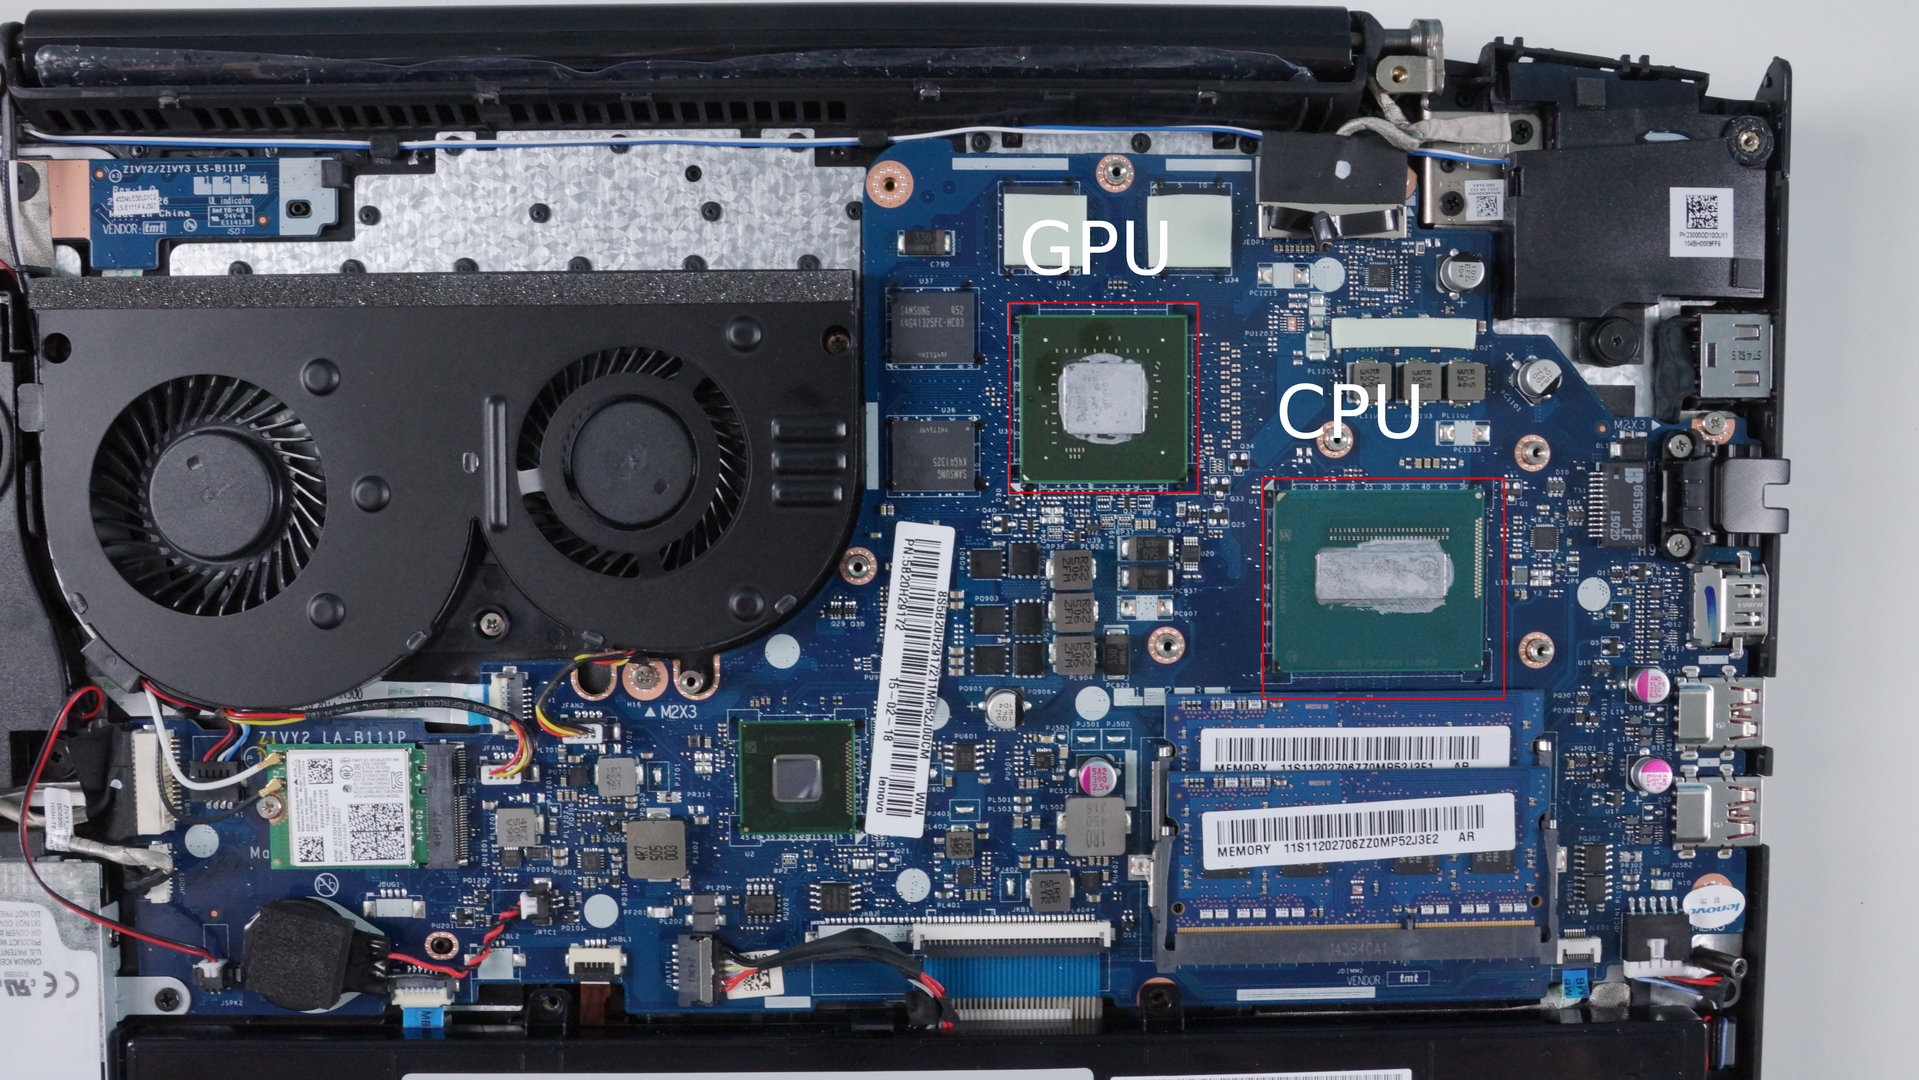 acceptabel mørkere teknisk Lenovo Y50 (GTX 960M) review - the slimmed down powerhouse got even better  | LaptopMedia.com